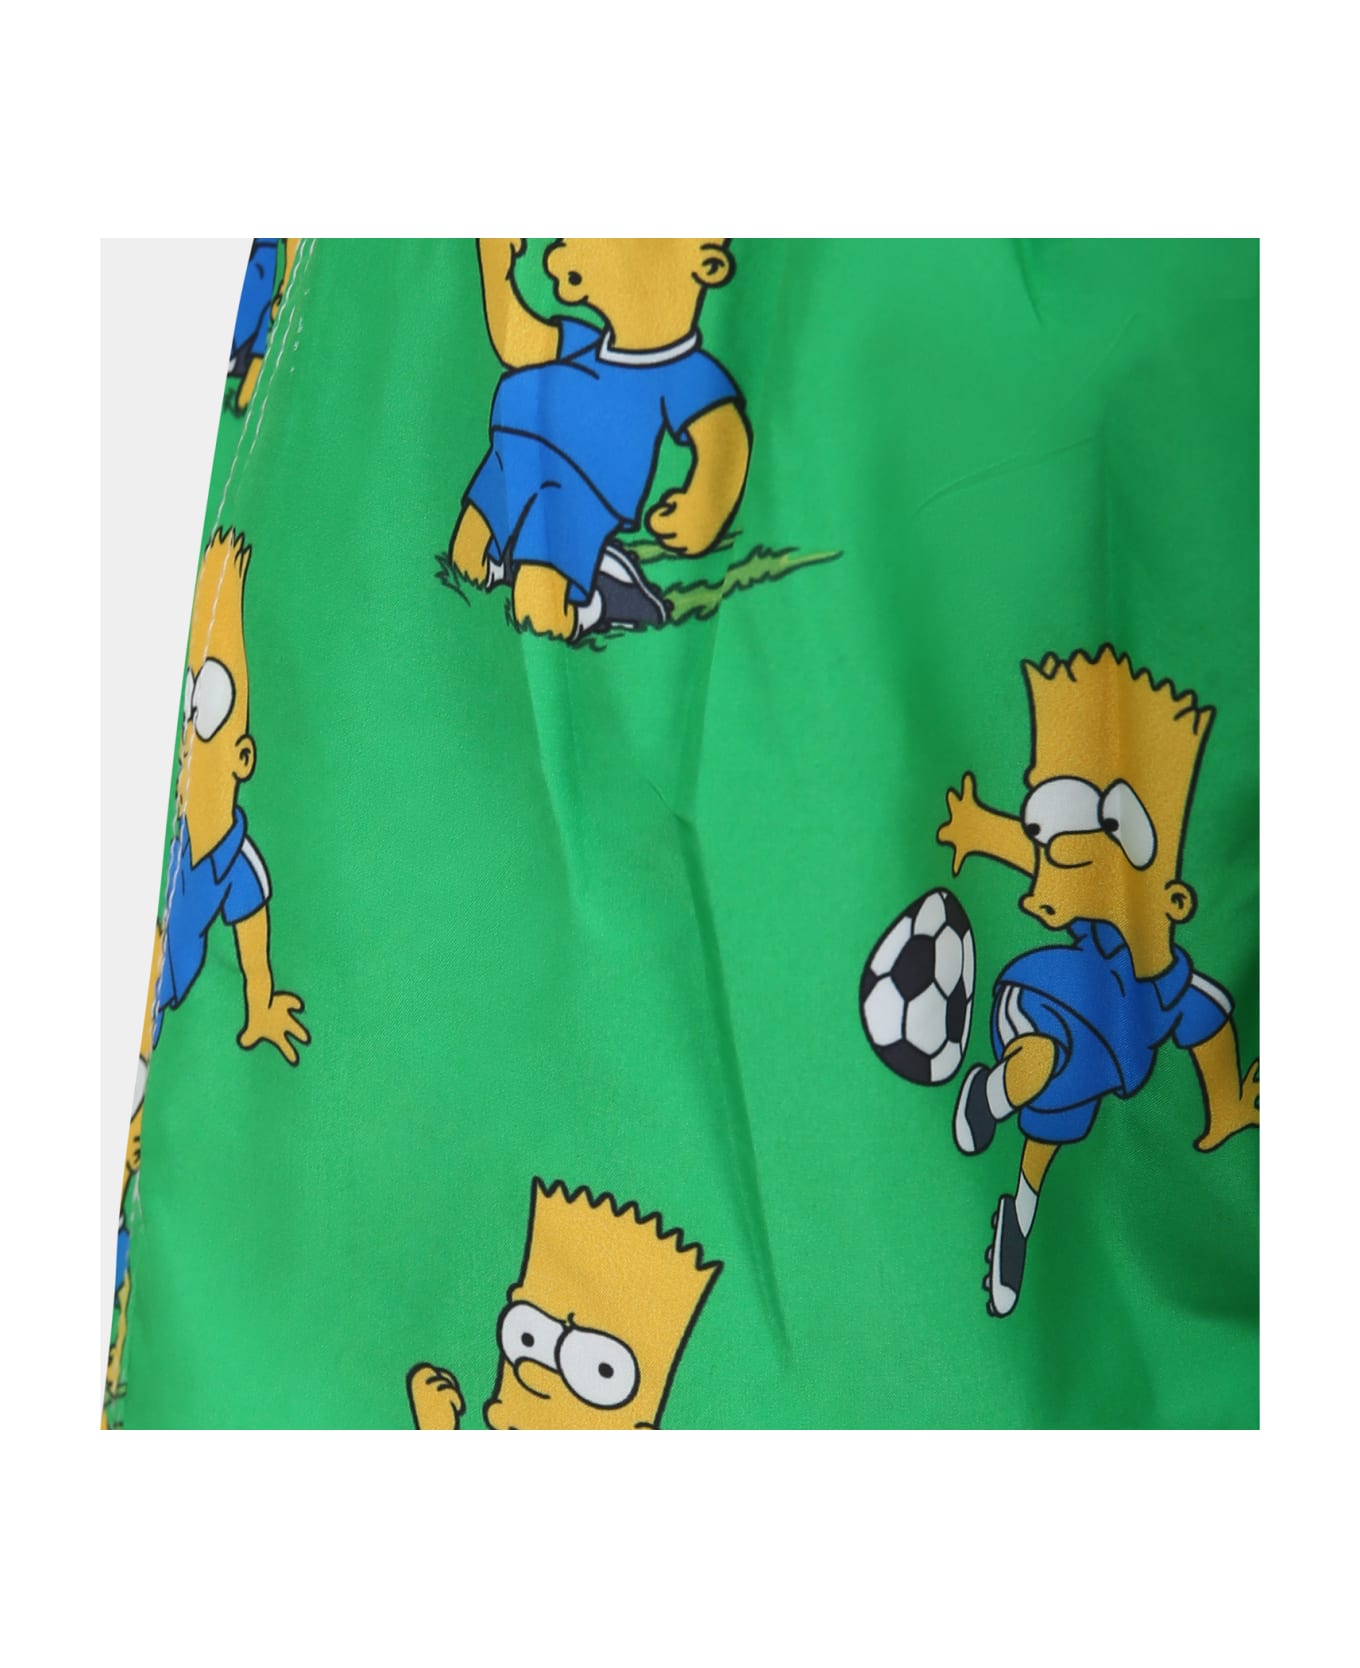 MC2 Saint Barth Green Swim Shorts For Boy With Bart Simpson Print - Green 水着